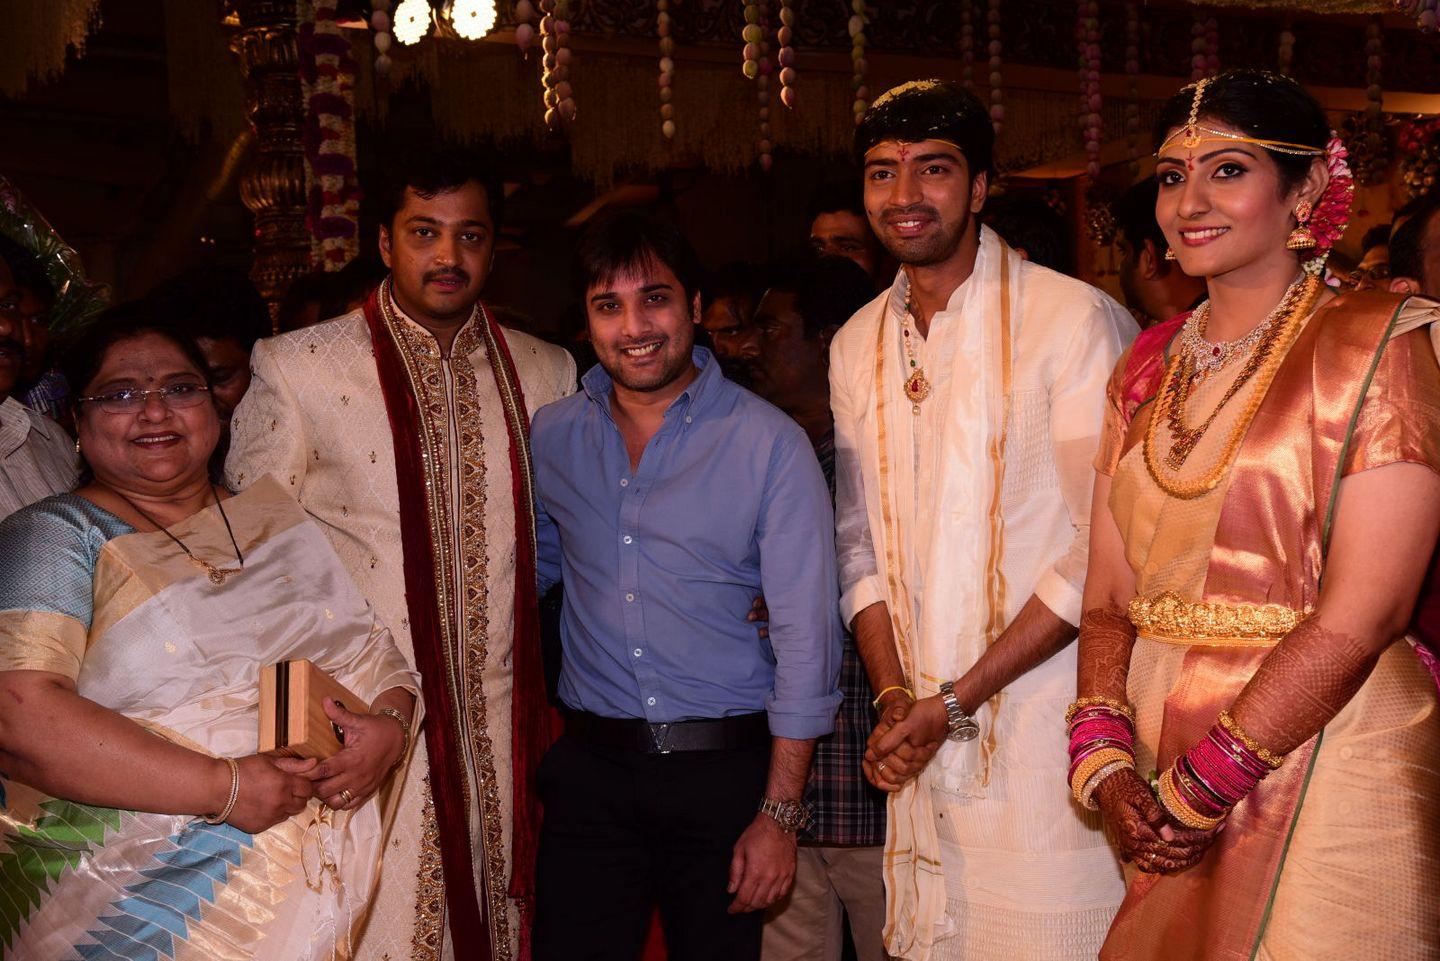 Main Celebs Group at Allari Naresh Wedding Photos